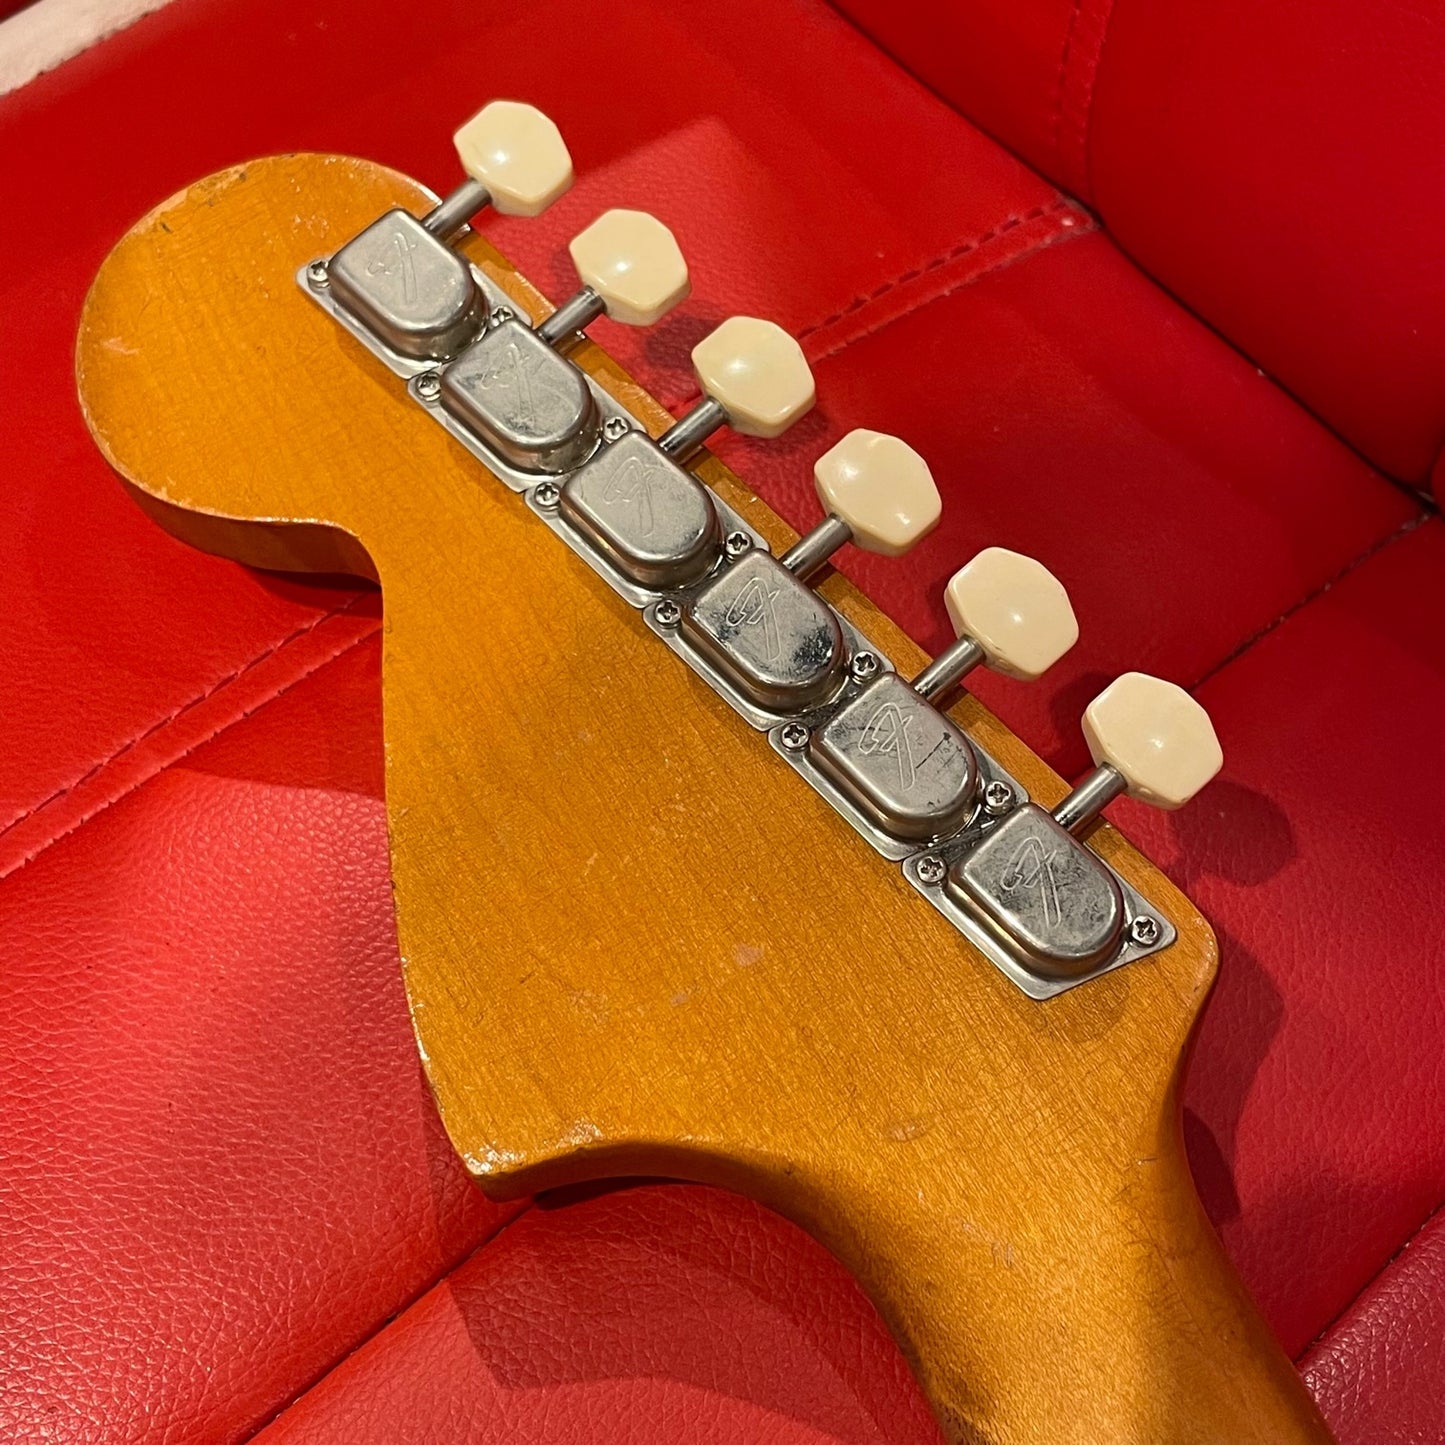 [SN 198111] USED Fender / 1967 Mustang Blue [04]